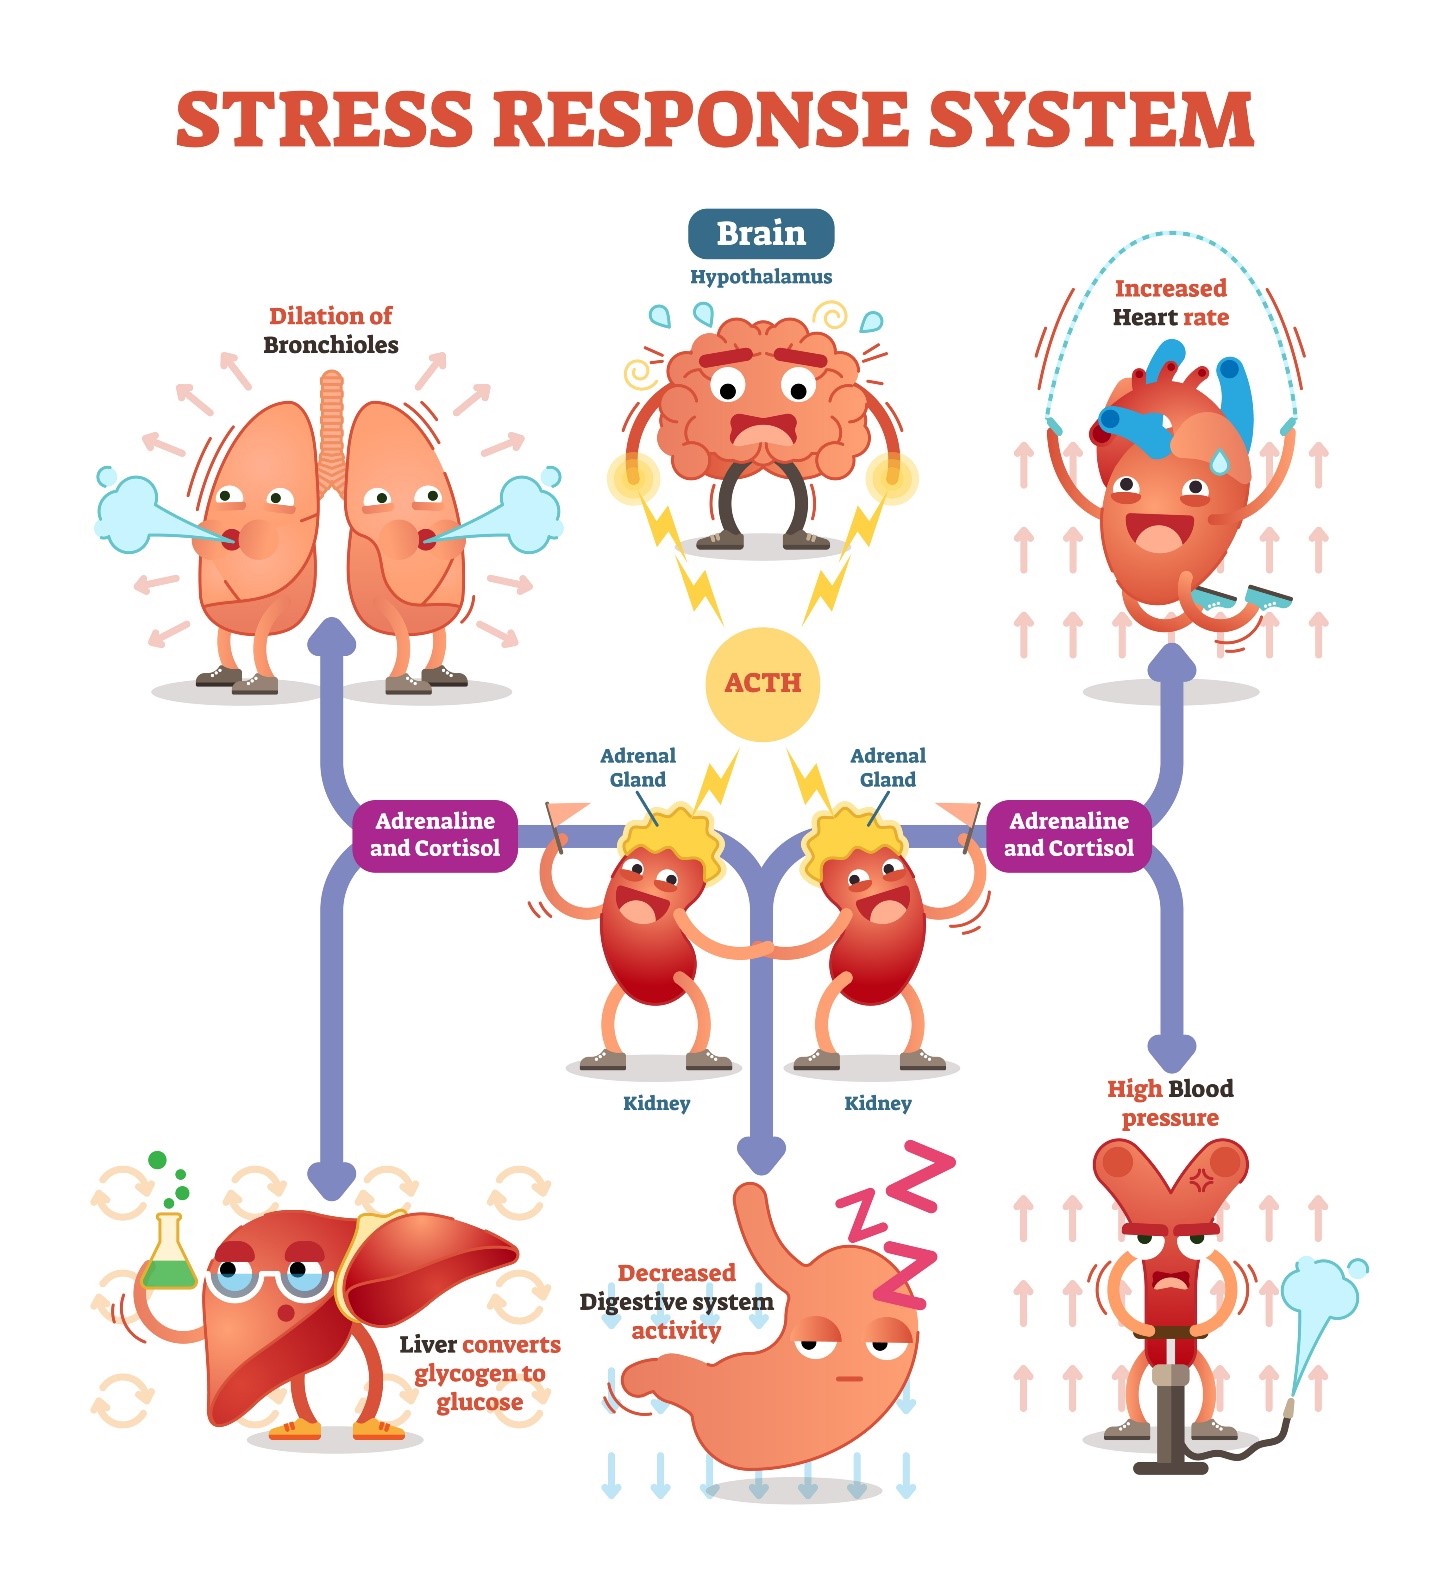 Stress response